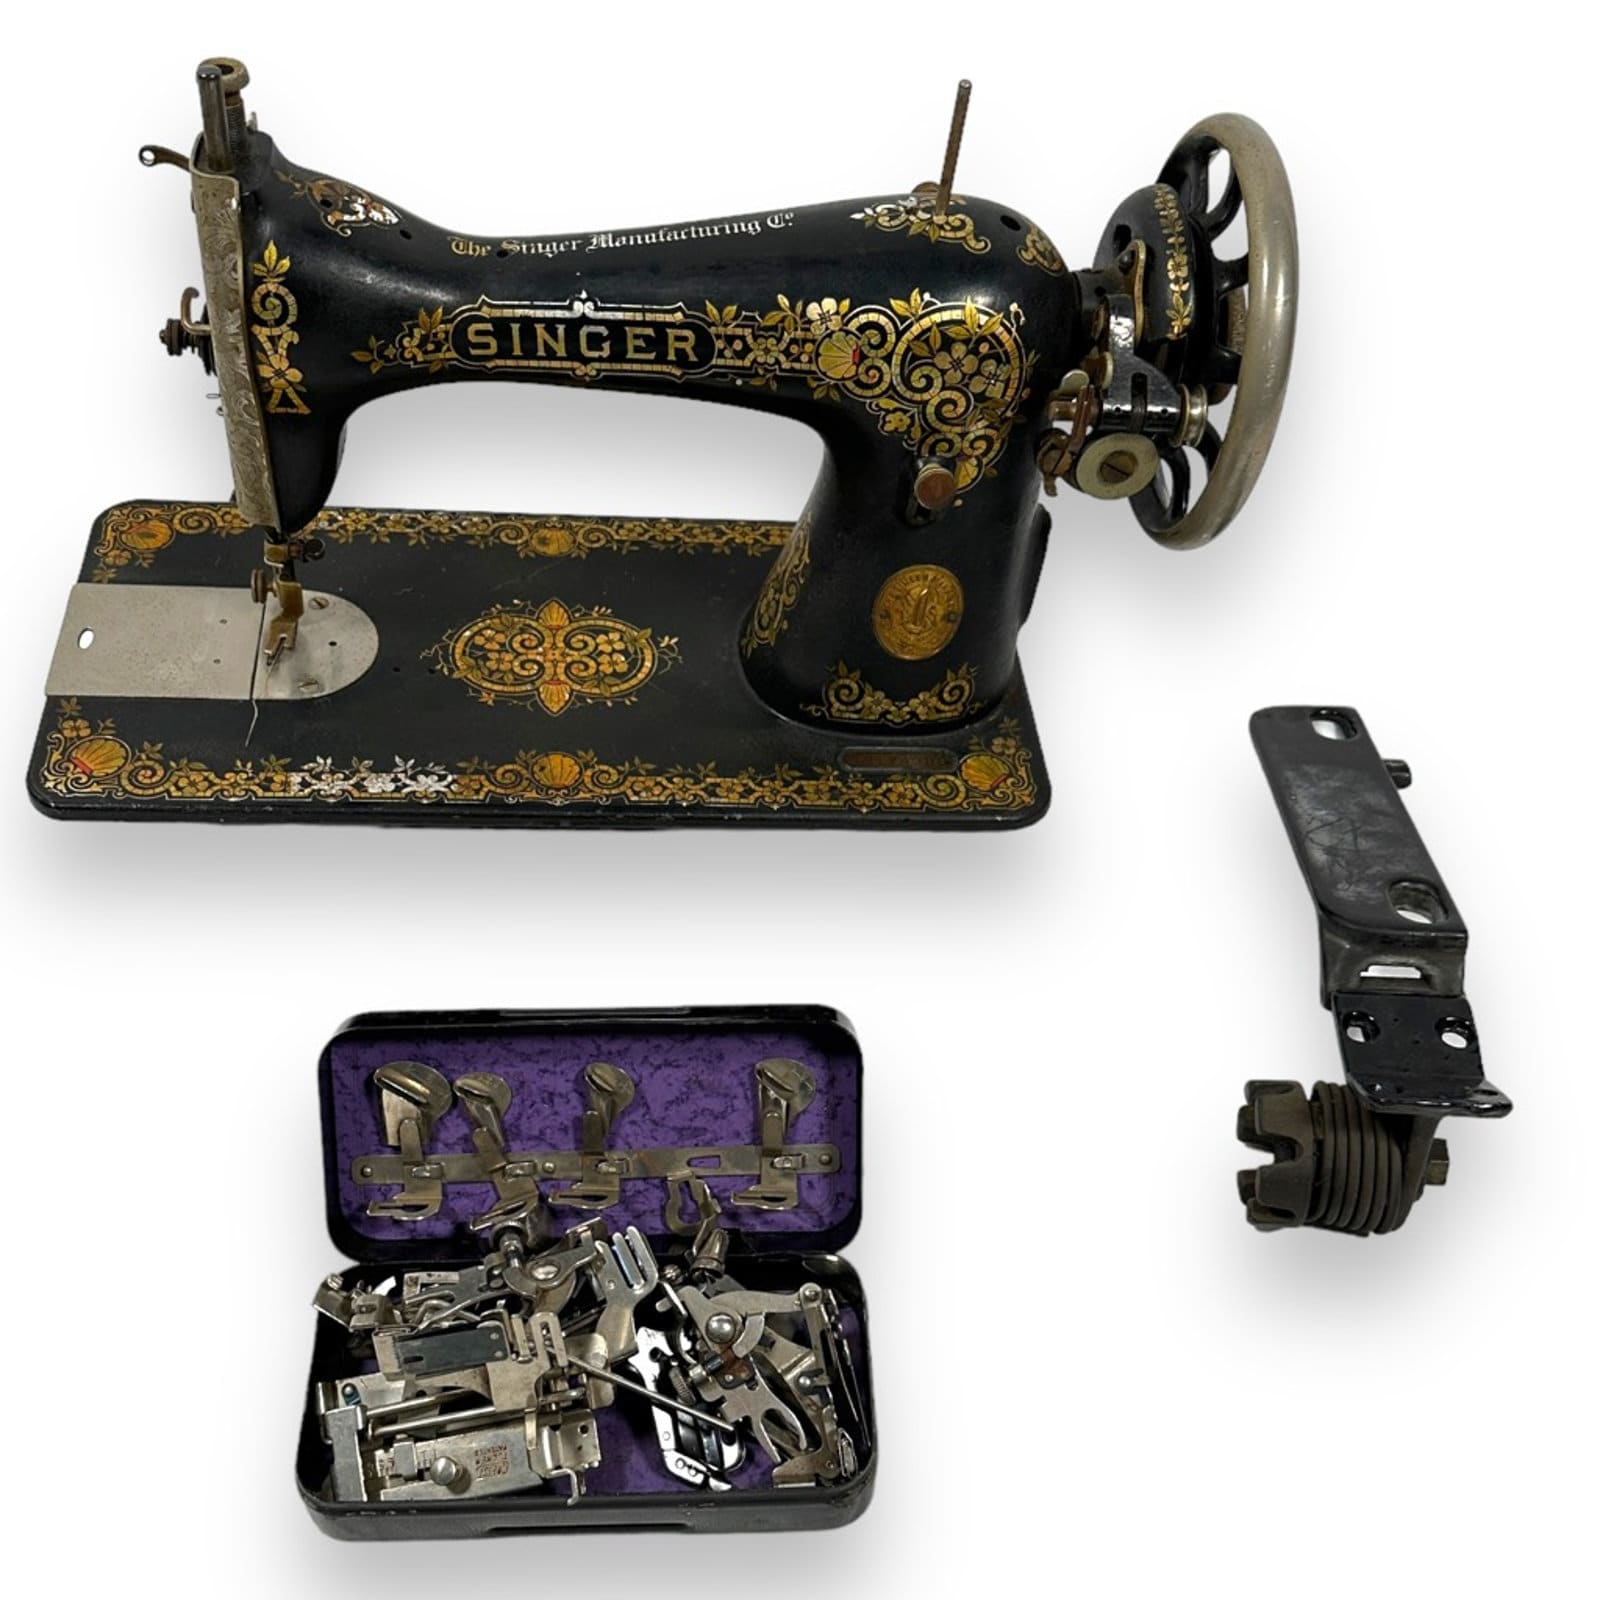 Singer Sewing Machines, Vintage, 1914 & 1940, good quality